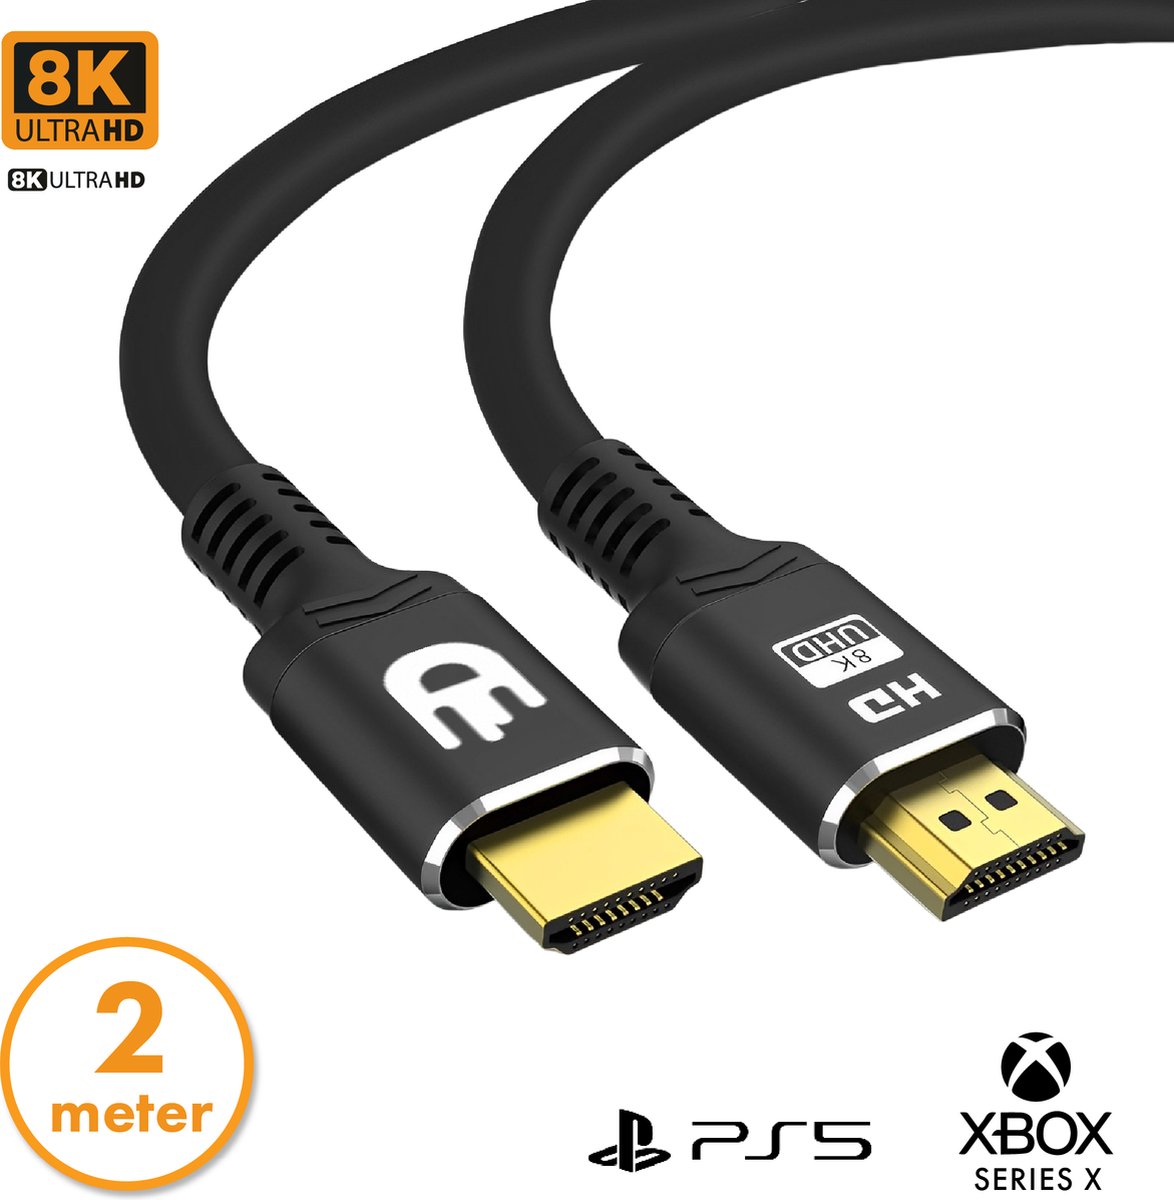 Drivv. Premium HDMI Kabel 2.1 - Ultra HD 8K - HDMI naar HDMI - Xbox Series X & PS5 - 2 meter - Zwart